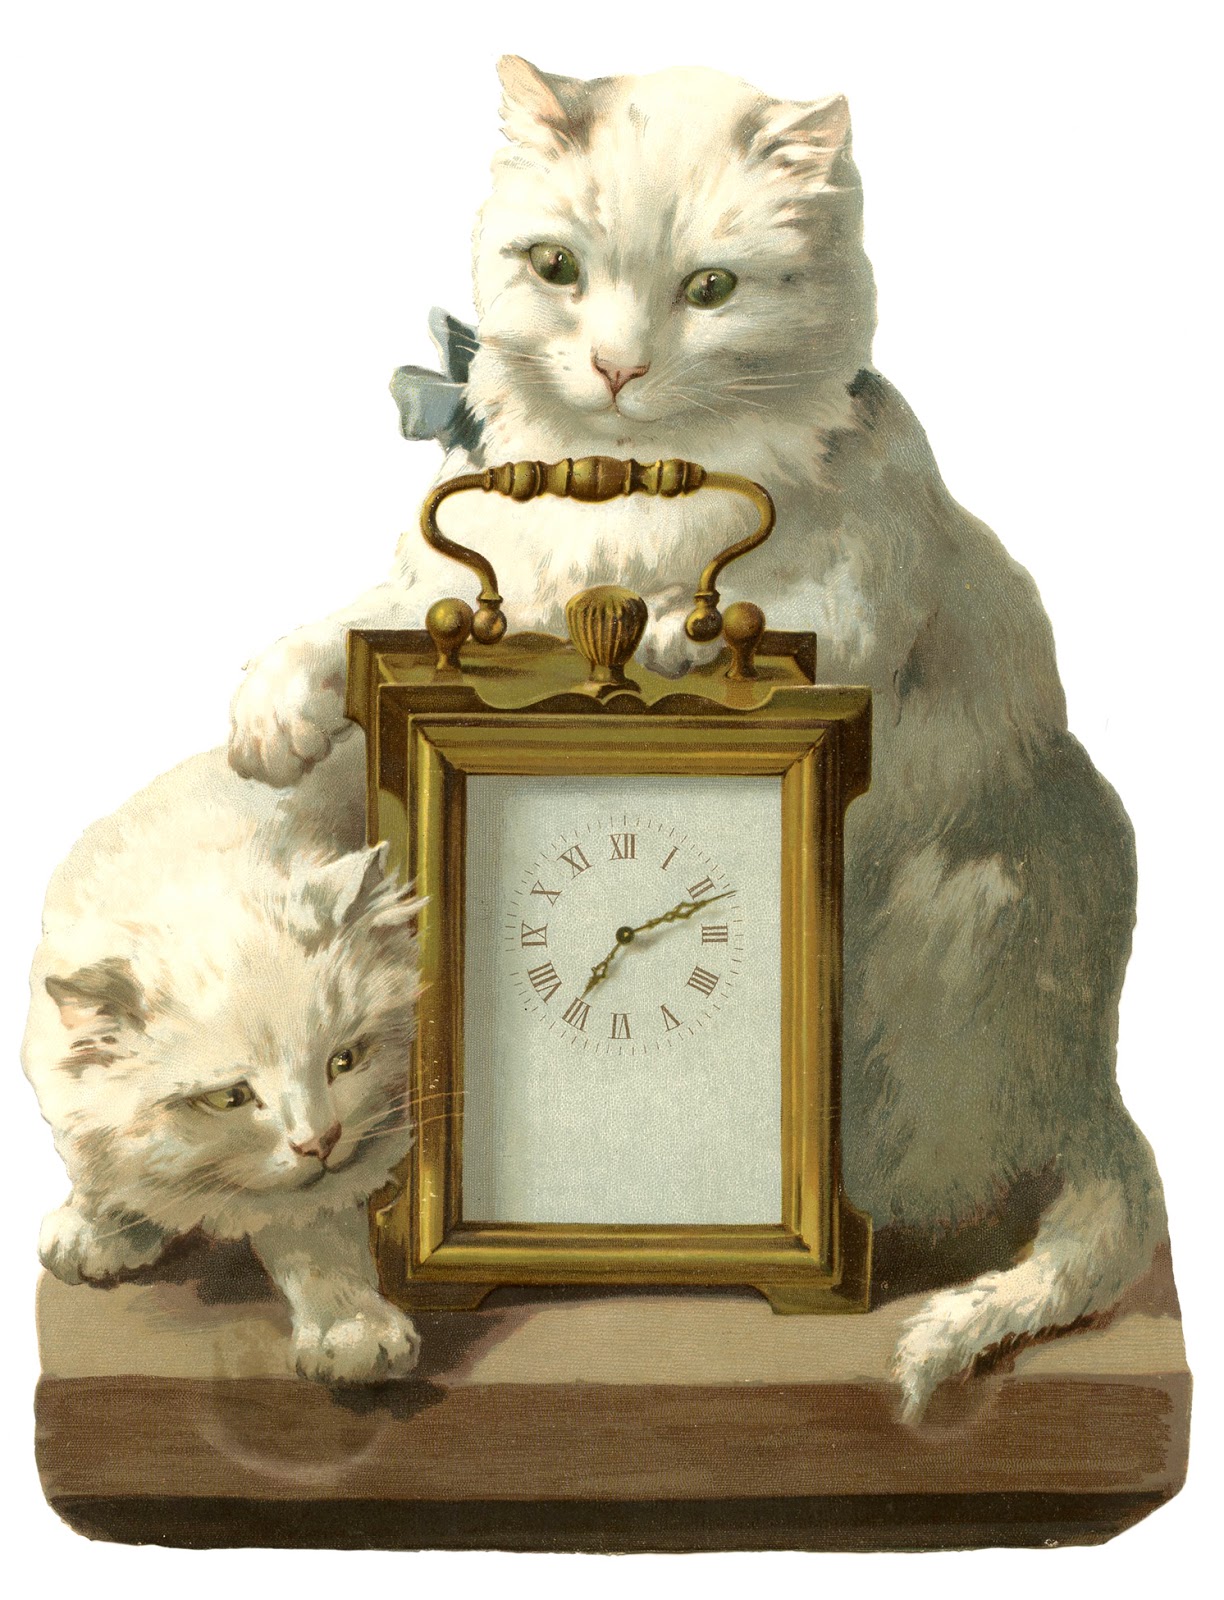 http://thegraphicsfairy.com/wp-content/uploads/blogger/-7AkHwDqhT1I/UZ6YtFafwUI/AAAAAAAAjFw/pKYJaqqf4l0/s1600/Cats-Clock-Vintage-Image-GraphicsFairy.jpg